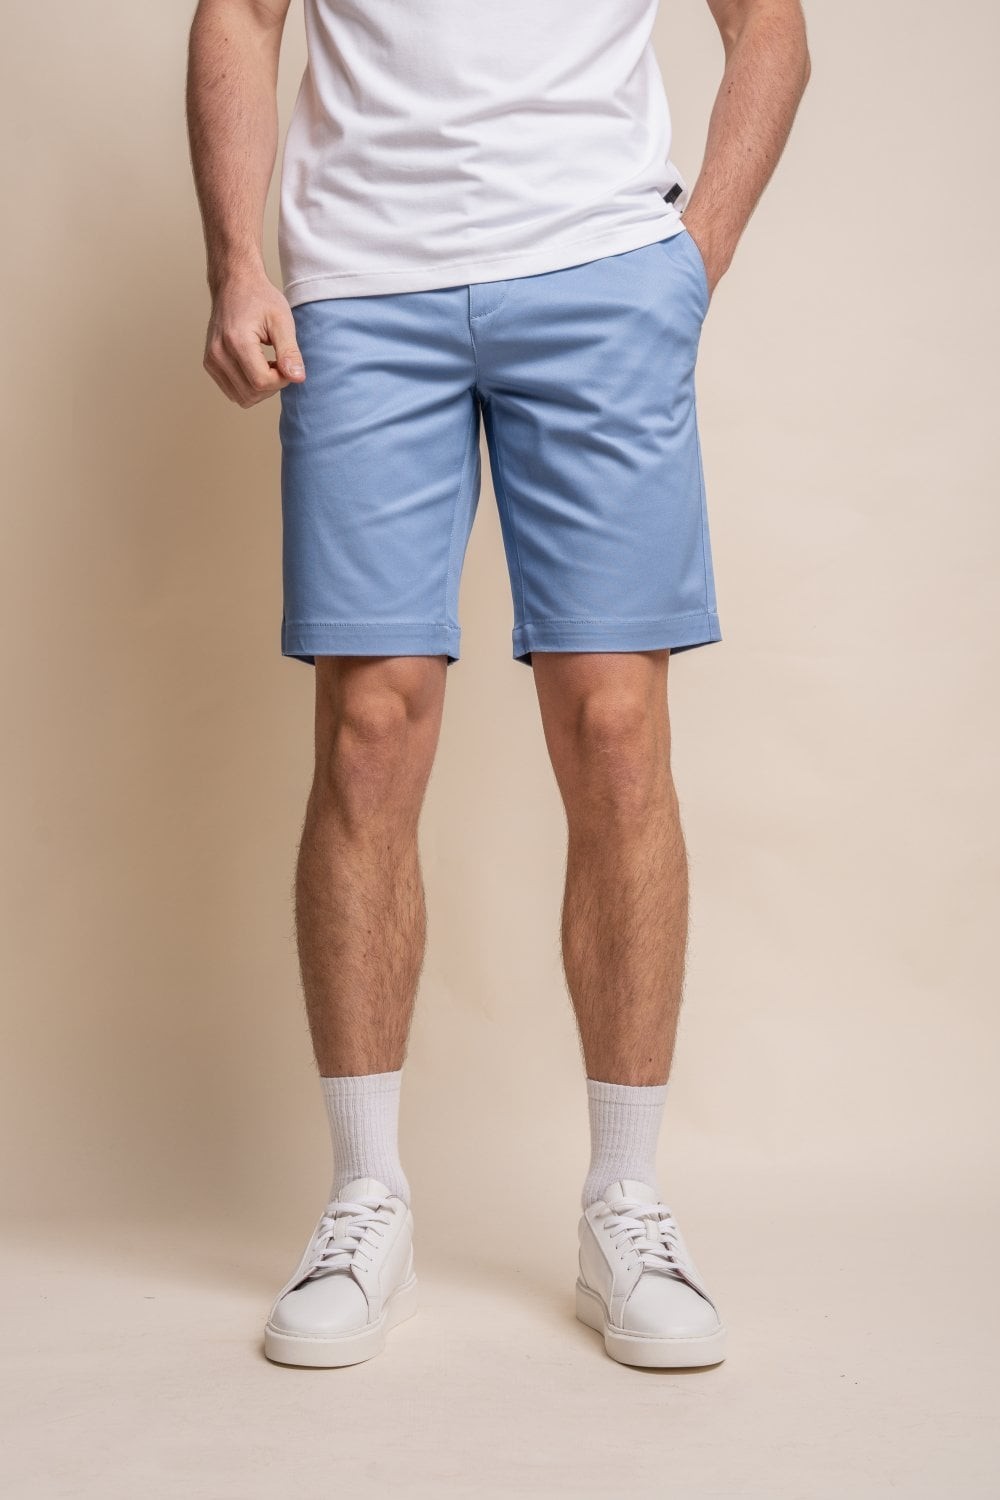 Herren Casual Slim Fit Chino Shorts aus Baumwolle - DAKOTA - Himmelblau